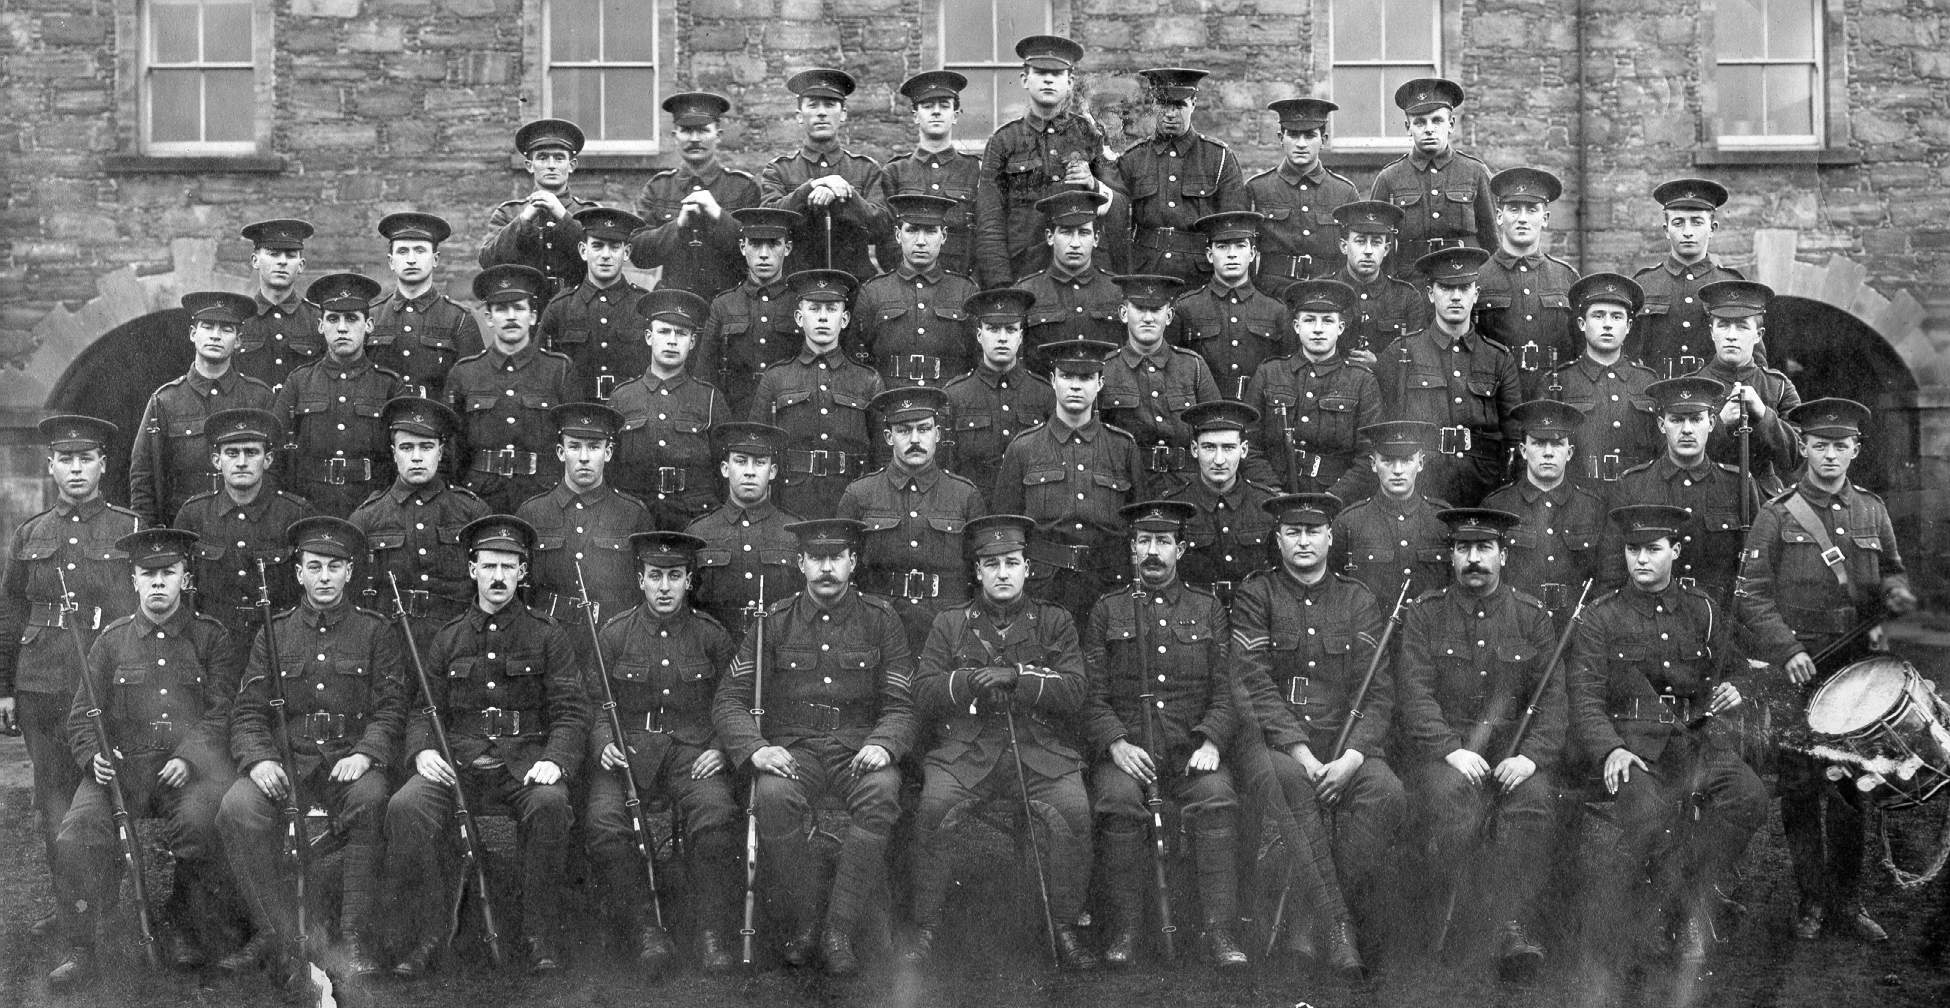 No. 3 Platoon, A Company, Fort George, Scotland, ca. 1915